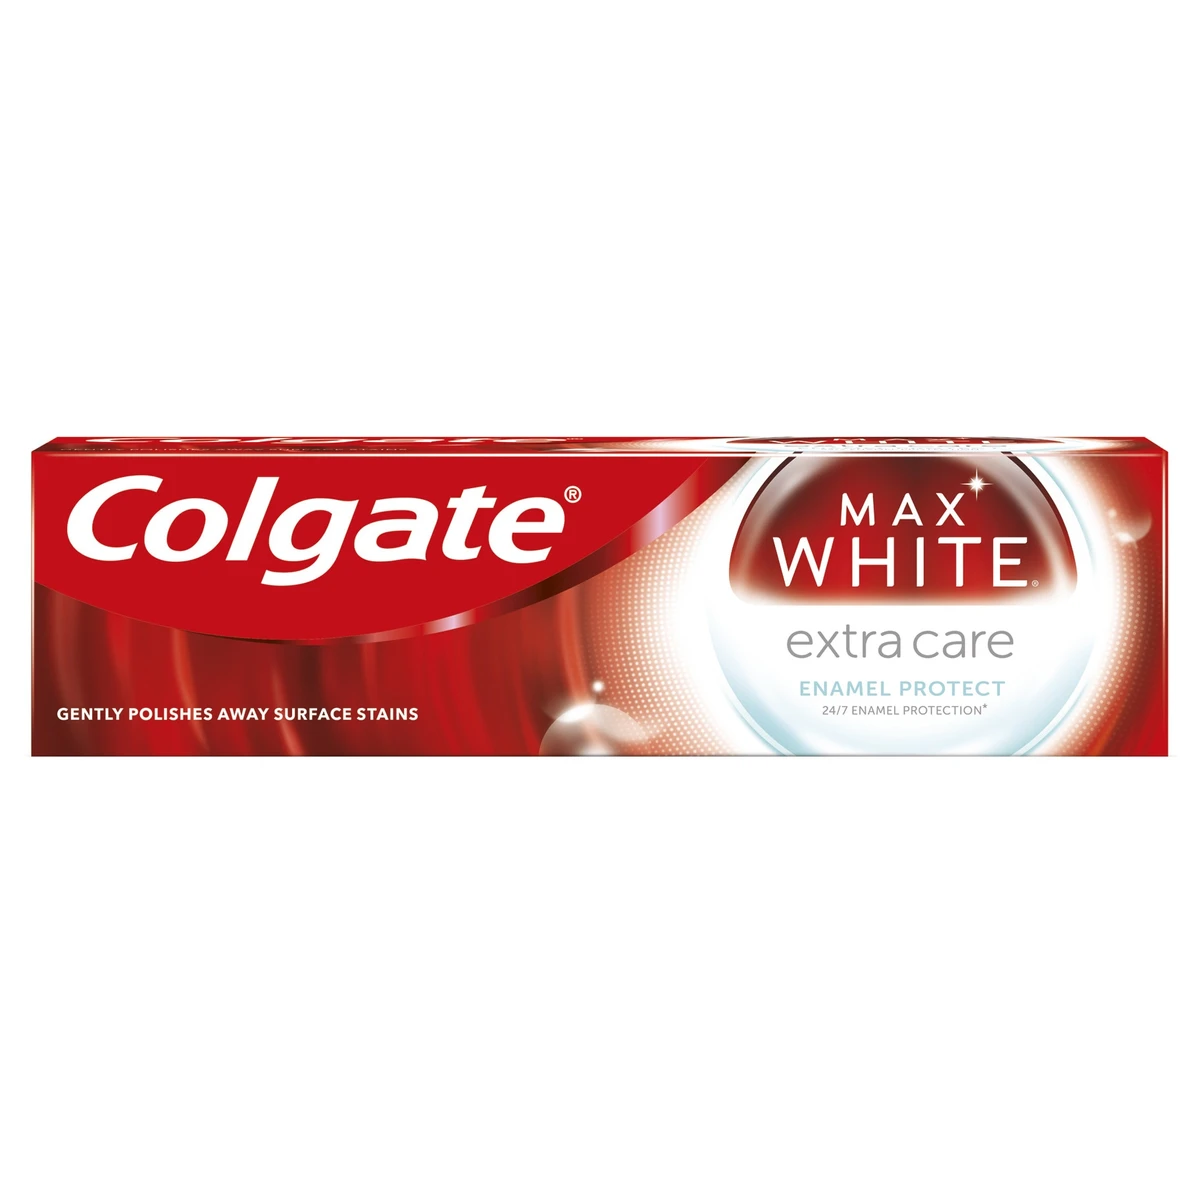 Colgate Max White Extra Care Enamel Protect fogkrém 75 ml